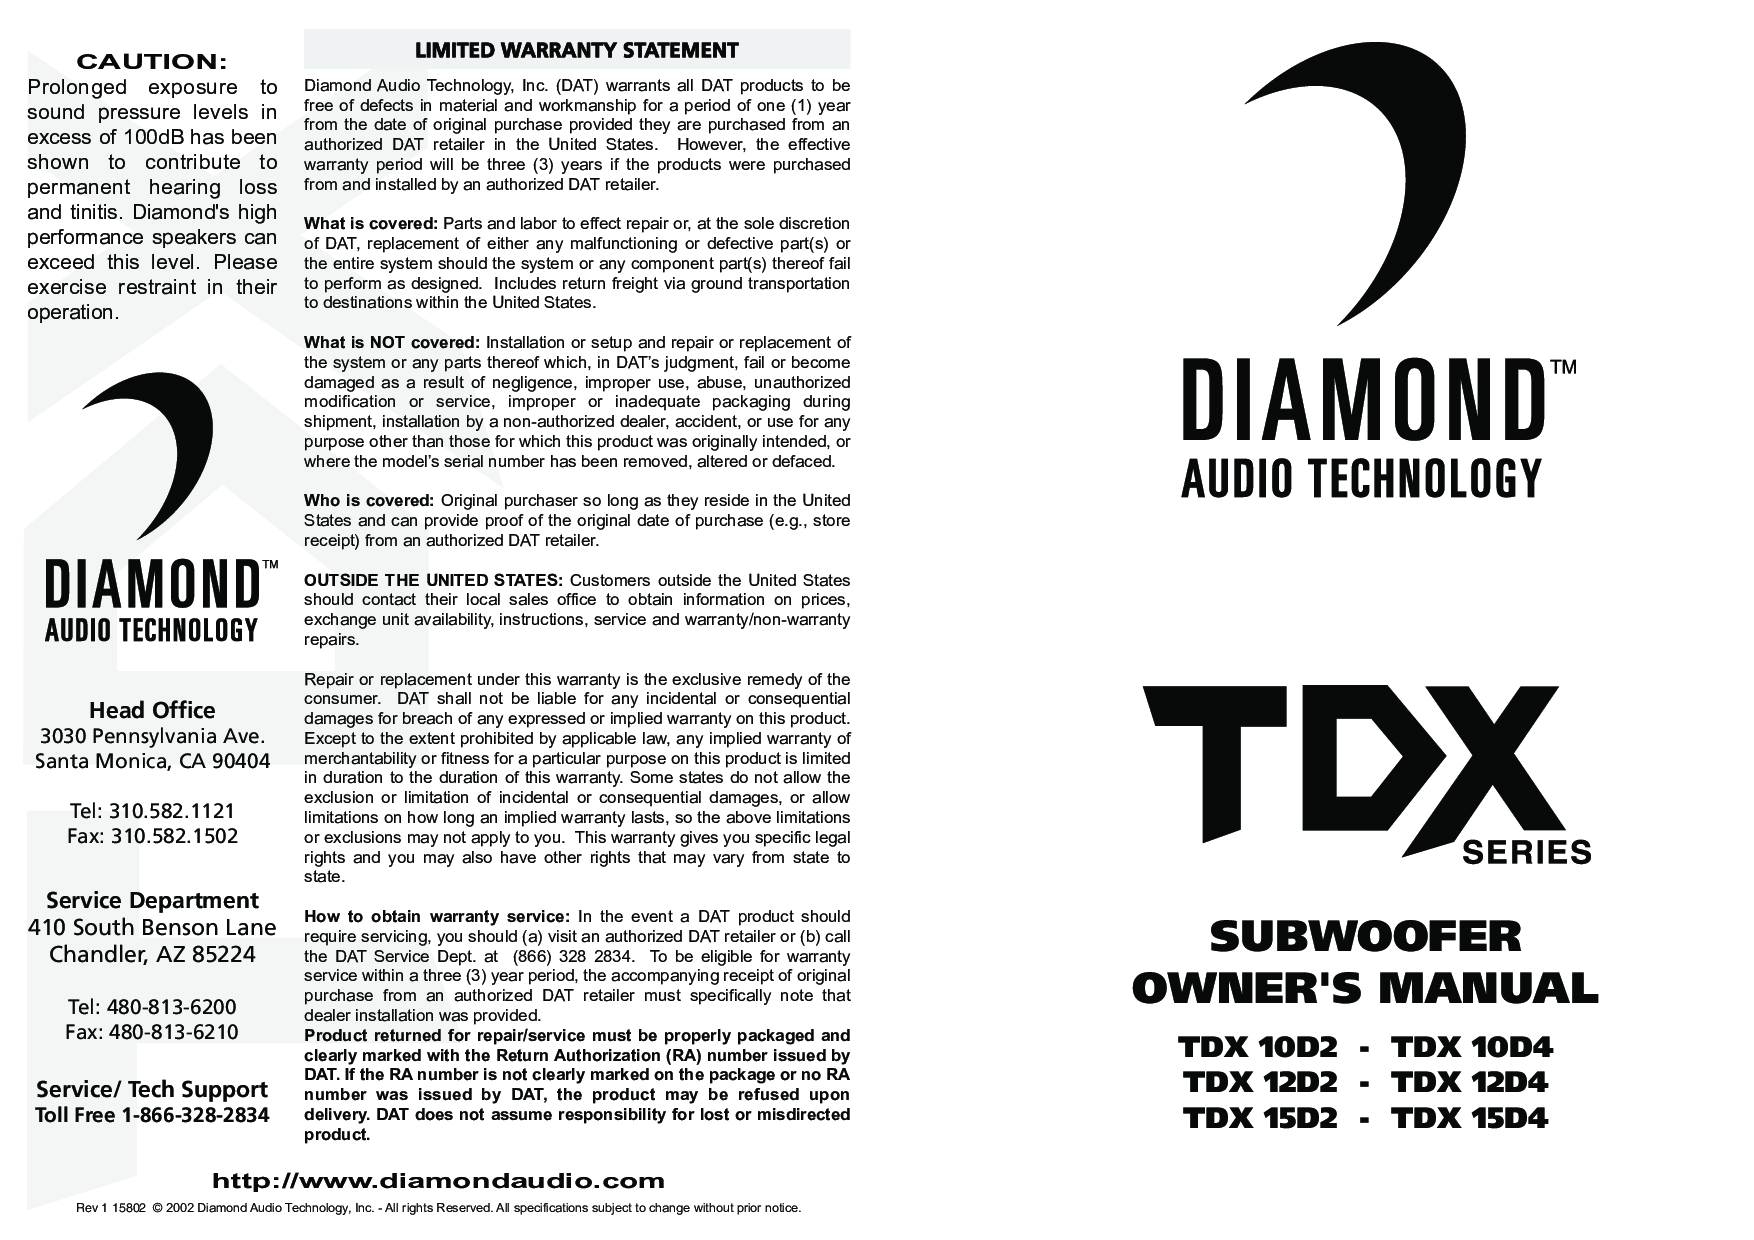 Diamond Audio Technology TDX 12D2, TDX 12D4, TDX 10D4, TDX 12D3, TDX 10D3 User Manual